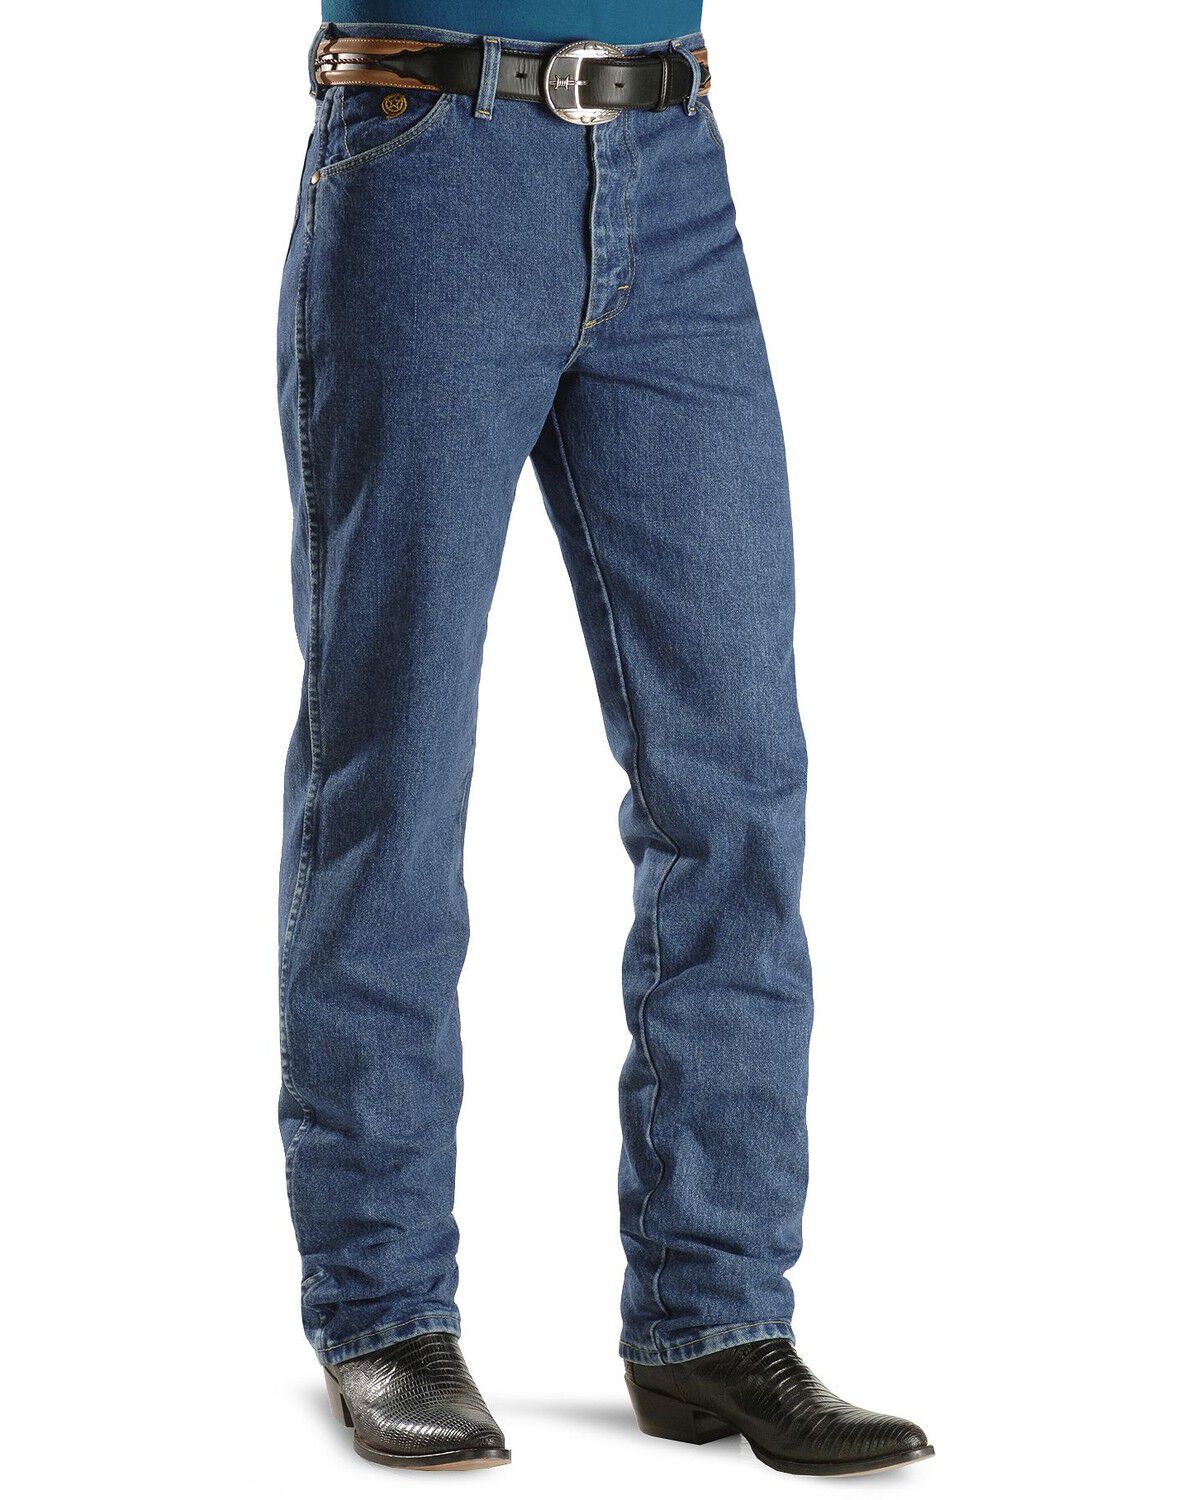 Wrangler Jeans - George Strait 936 Slim 